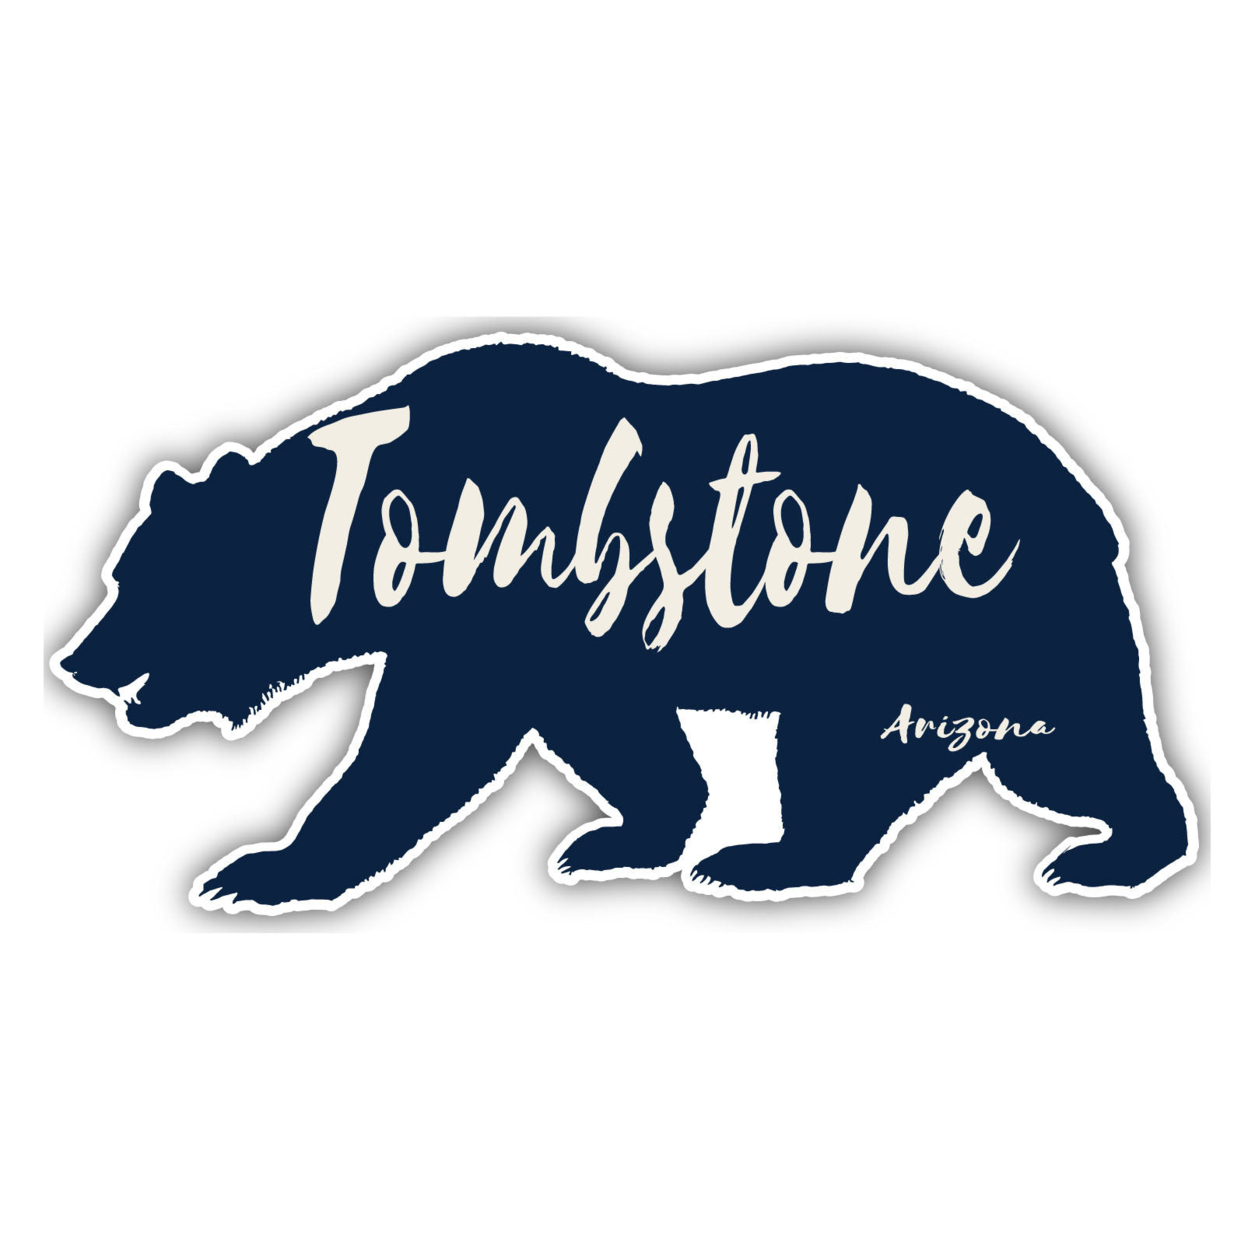 Tombstone Arizona Souvenir Decorative Stickers (Choose Theme And Size) - Single Unit, 2-Inch, Bear